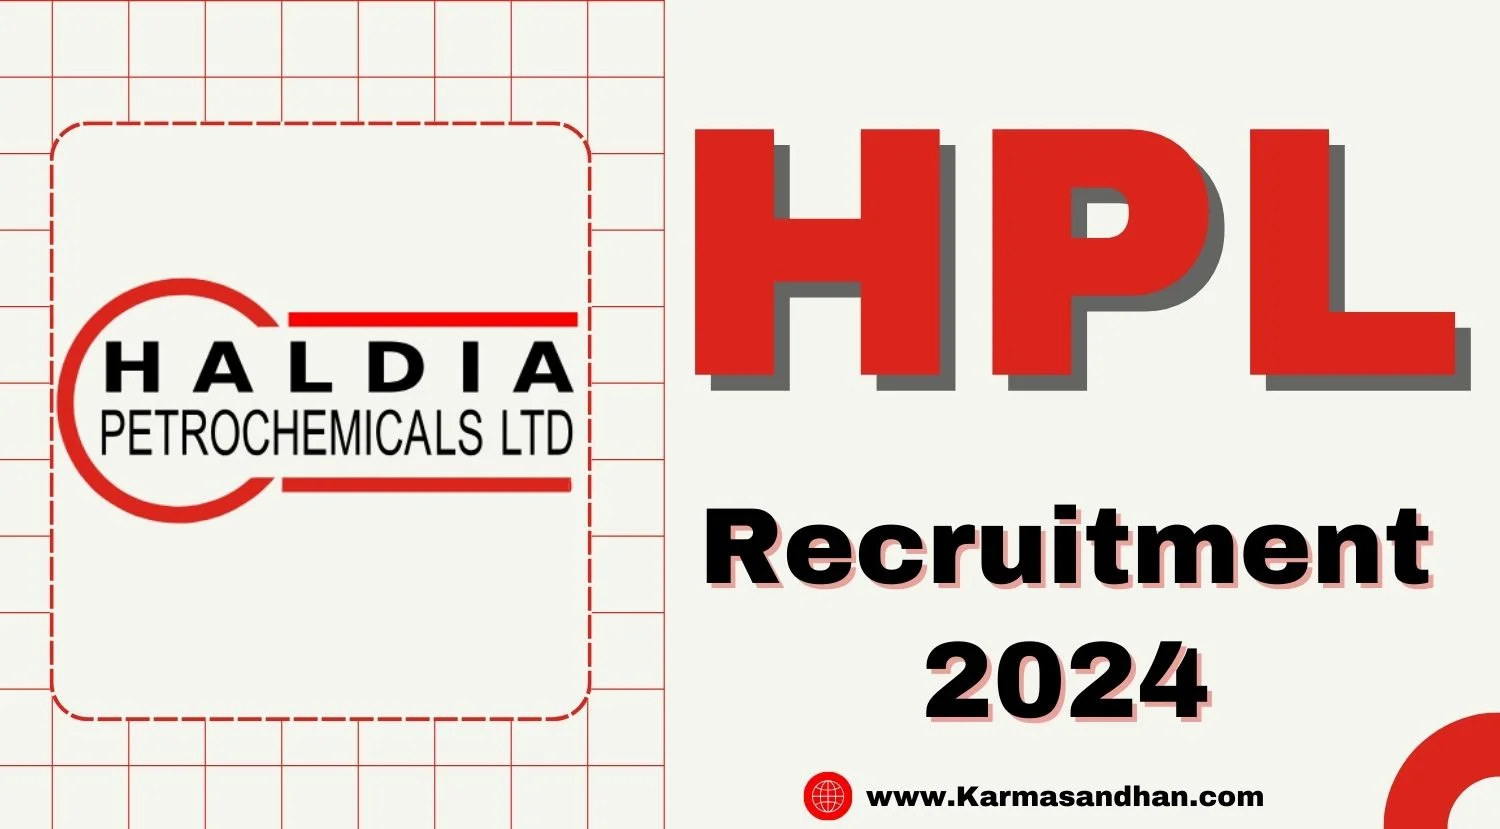 Haldia Petrochemicals Ltd Recruitment 2024